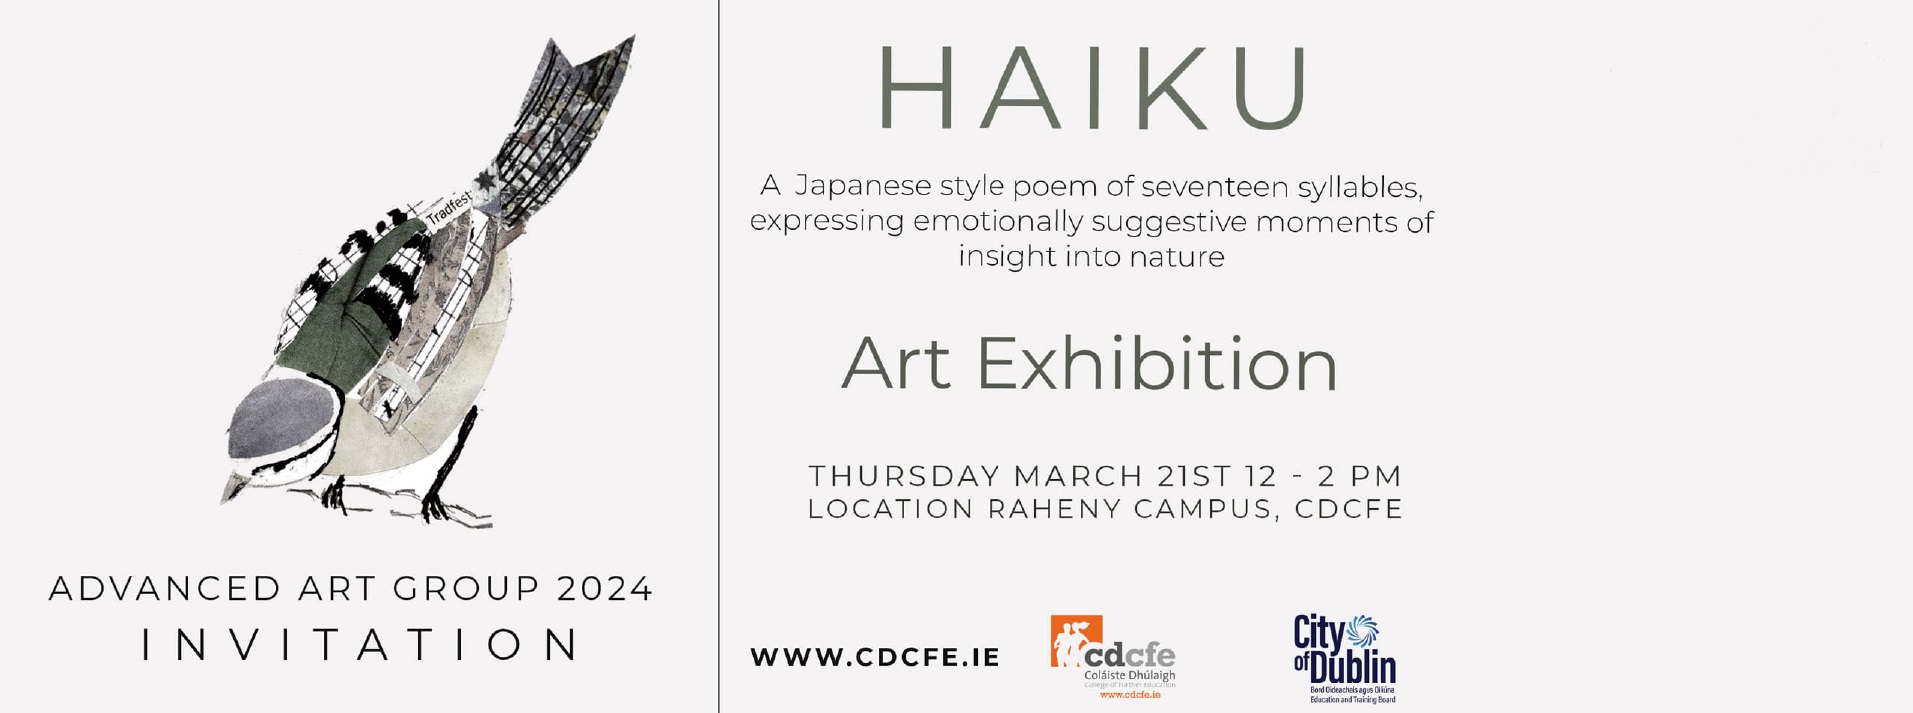 Haiku Art Exhibition